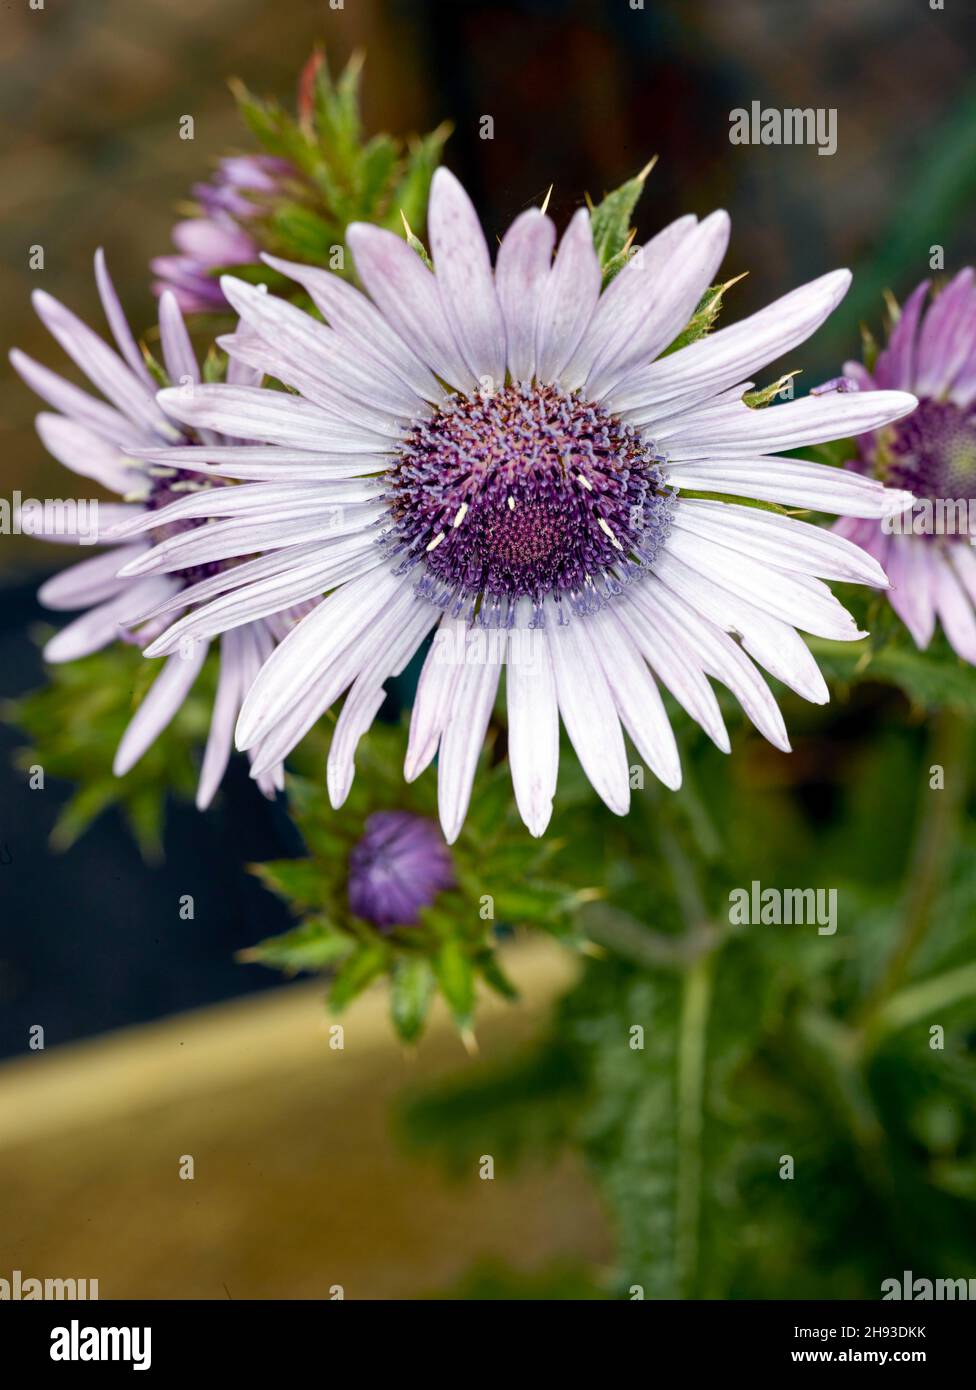 Lovely Berkheya Purpurea – Zulu Warrior,daisy-like flowers. Natural close-up flower portrait Stock Photo